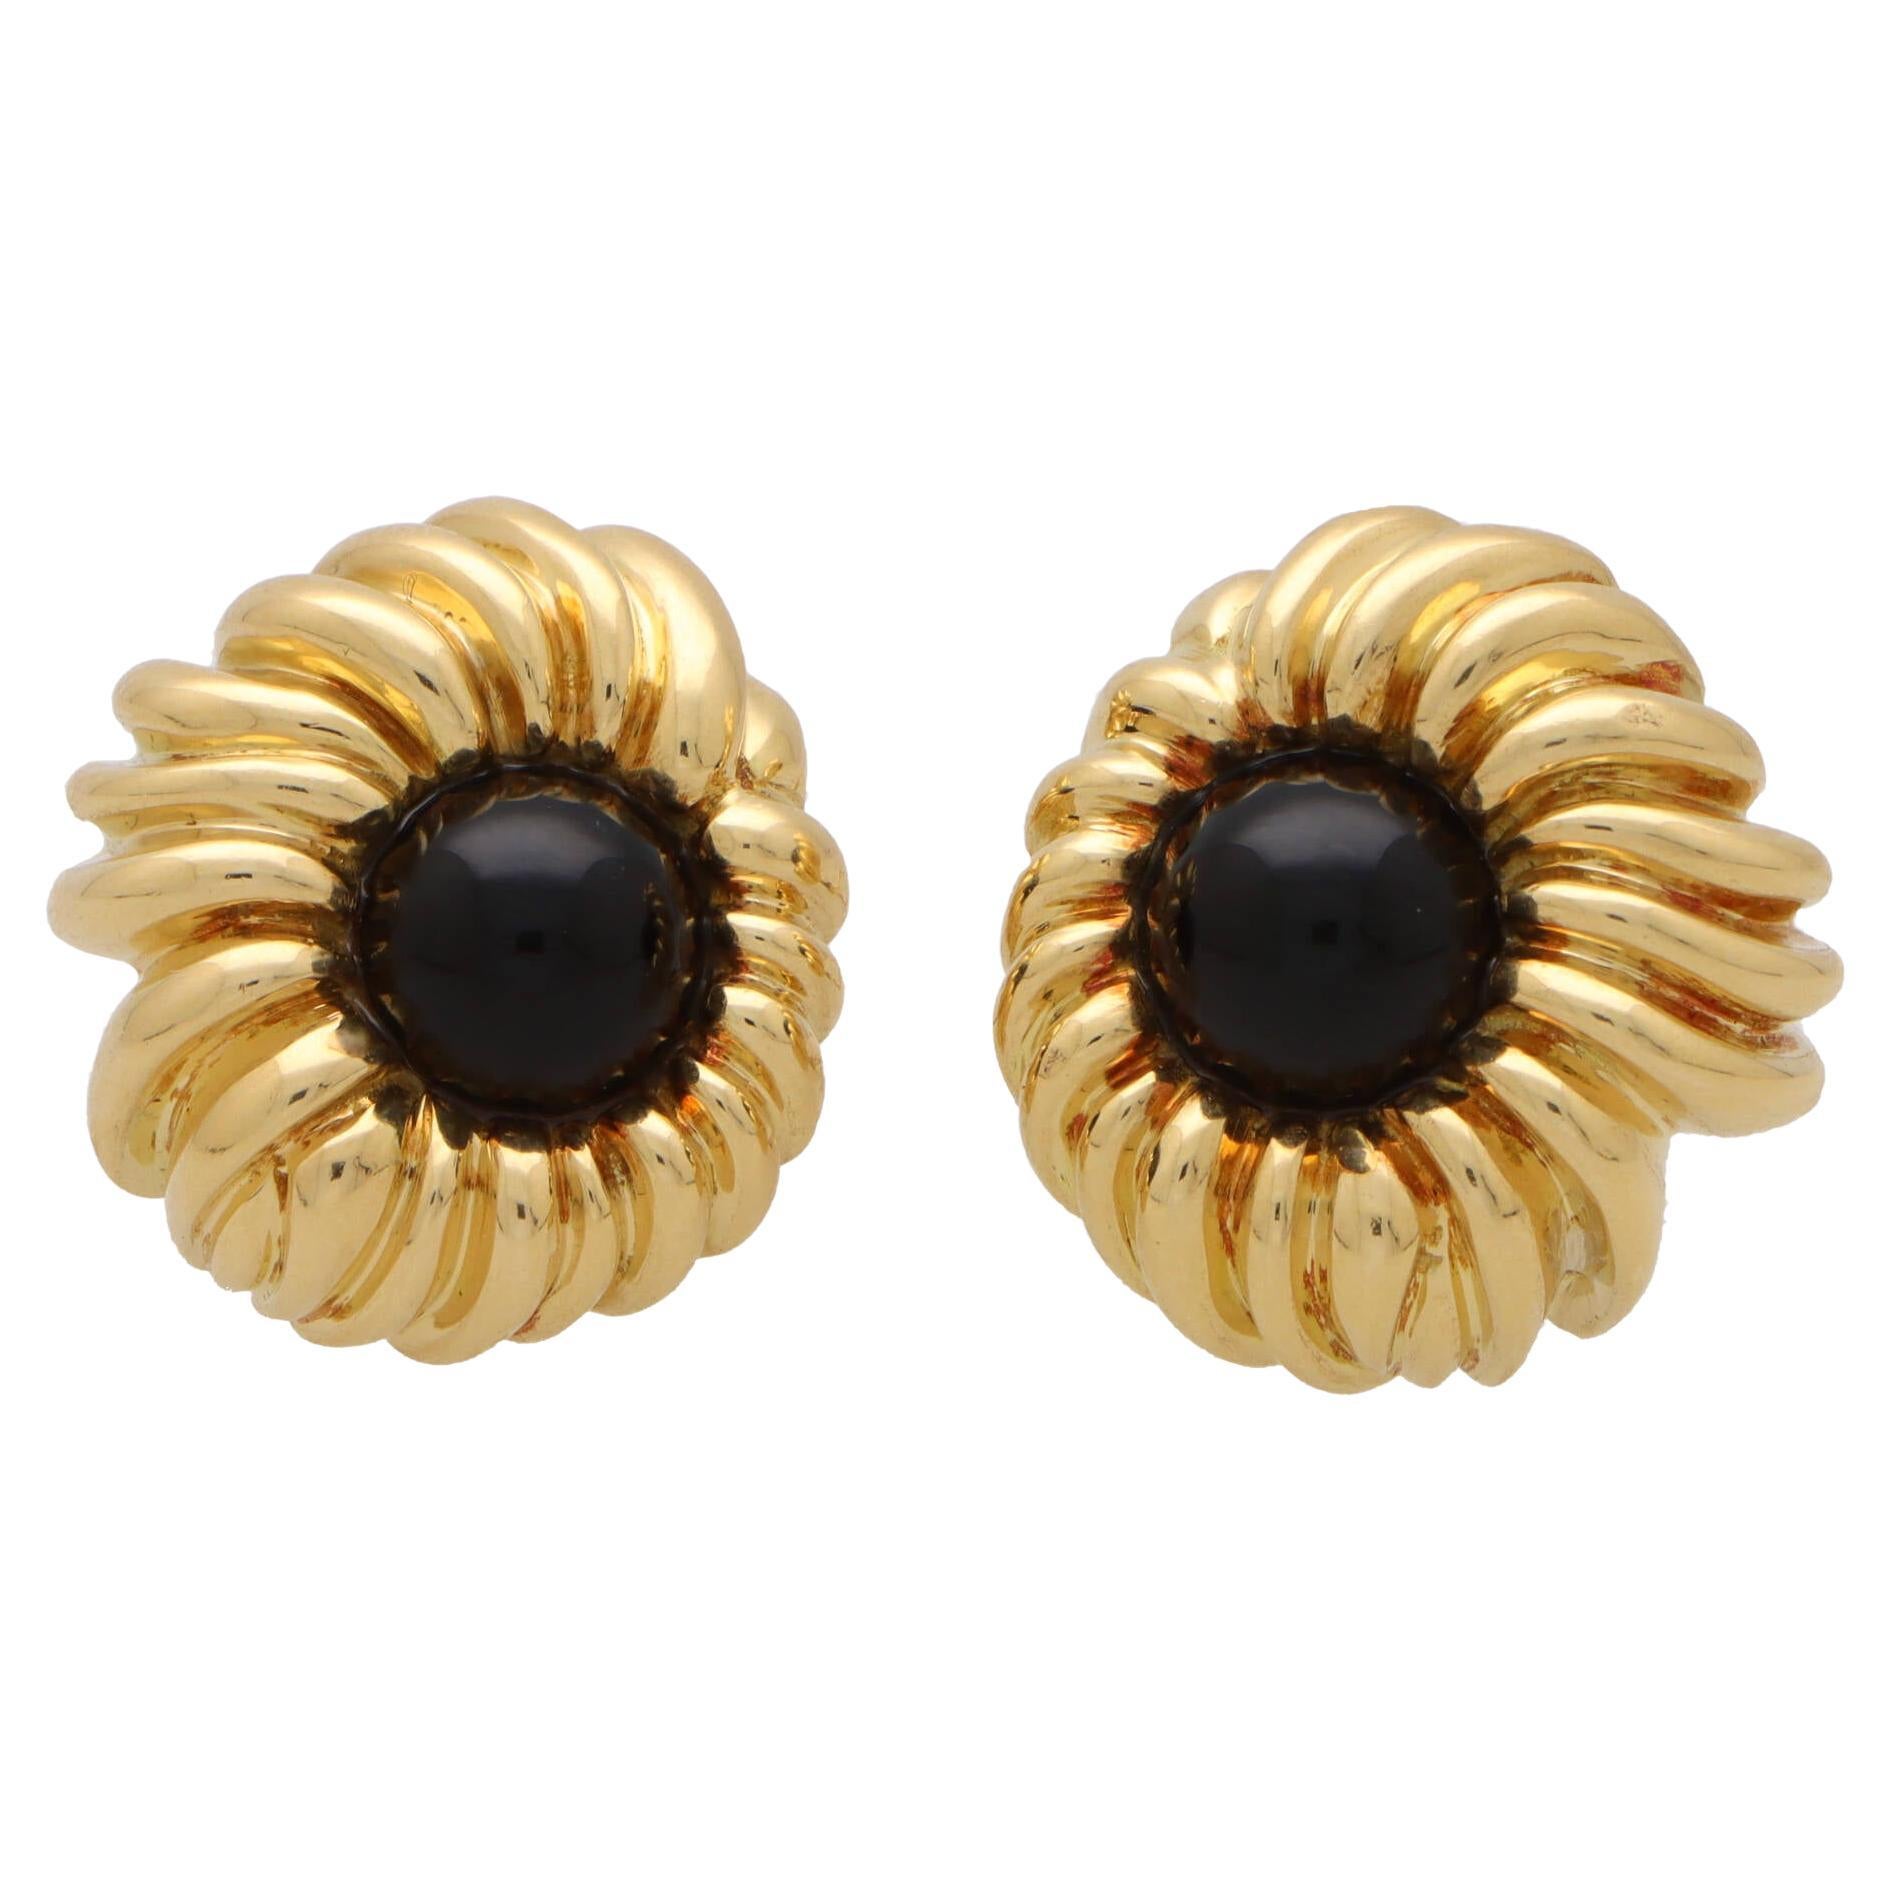  Vintage Tiffany & Co. Onyx Flower Earrings Set in 18k Yellow Gold For Sale